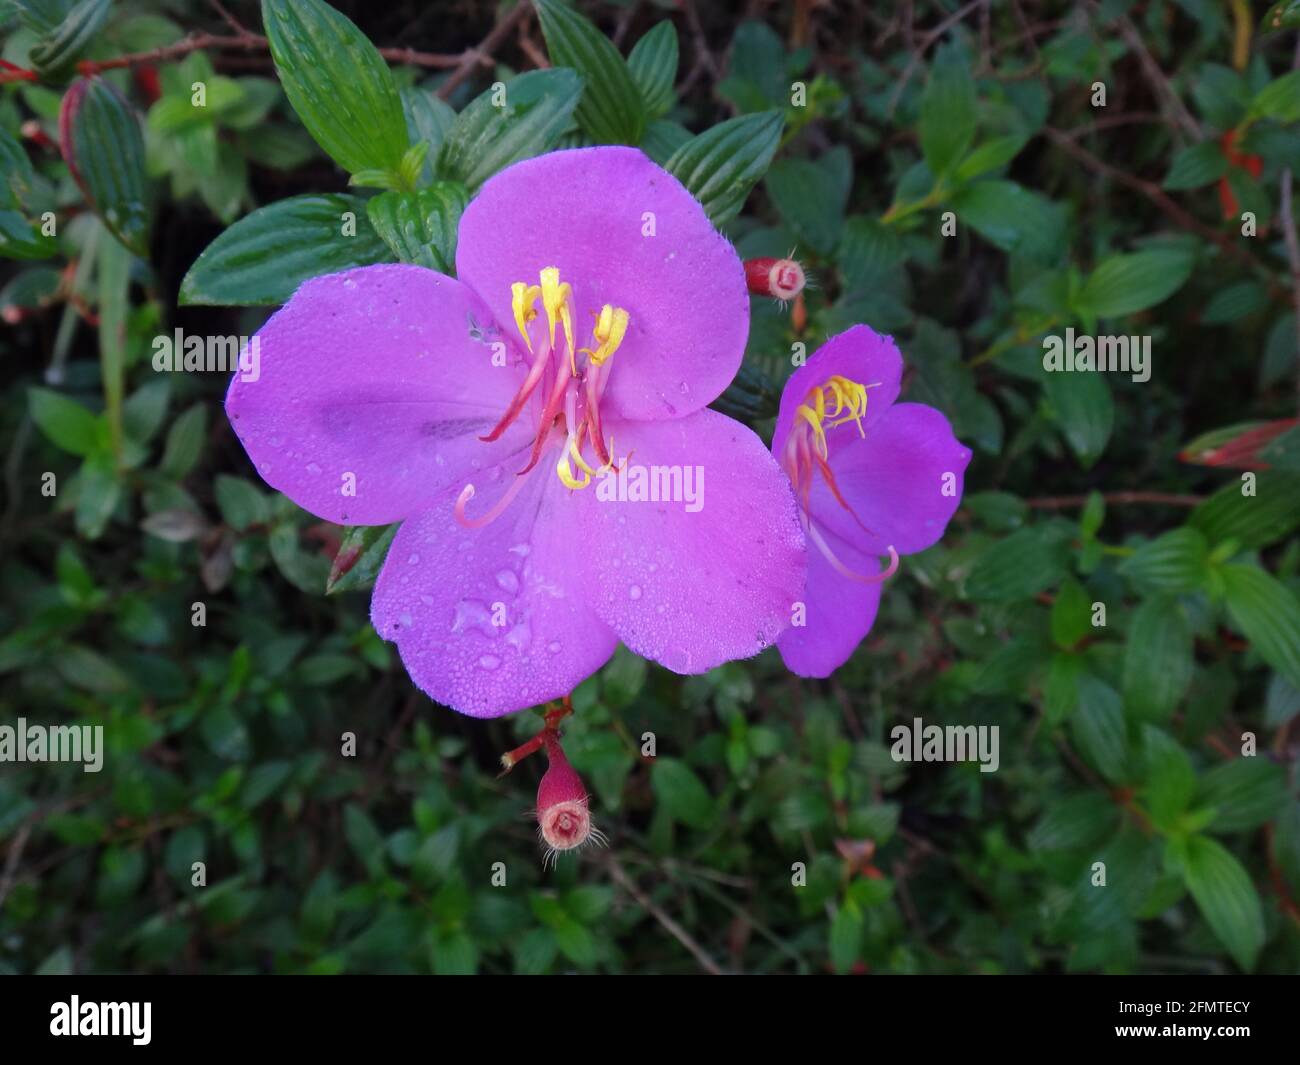 Purple Tibouchina dissotis flower grown in the garden with raindrops on it Stock Photo